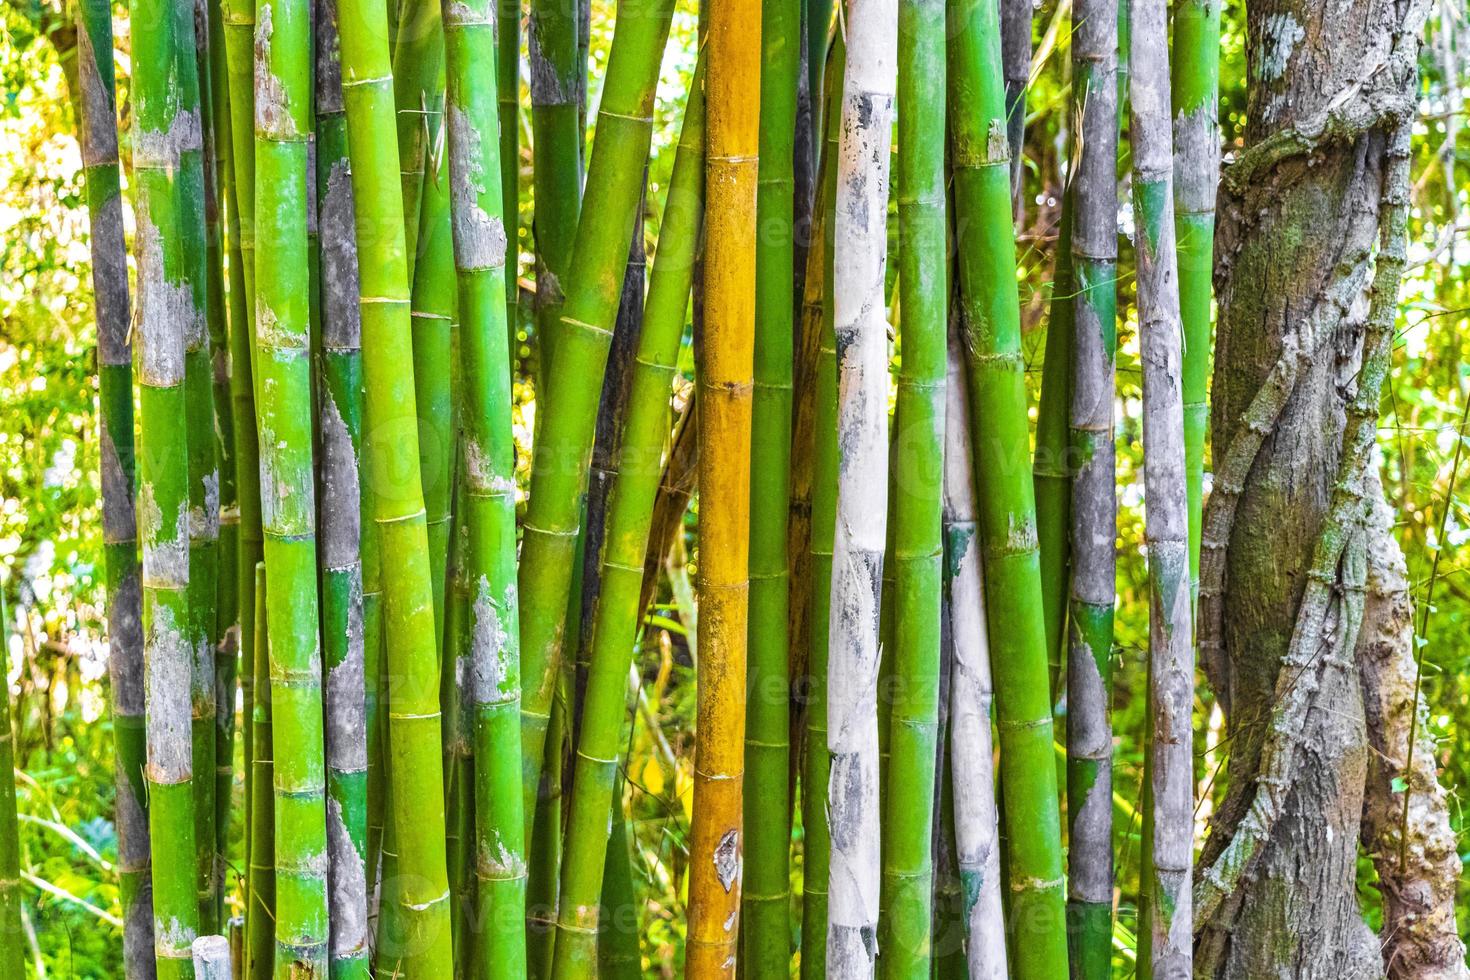 árvores de bambu verde amarelo floresta tropical de luang prabang laos. foto